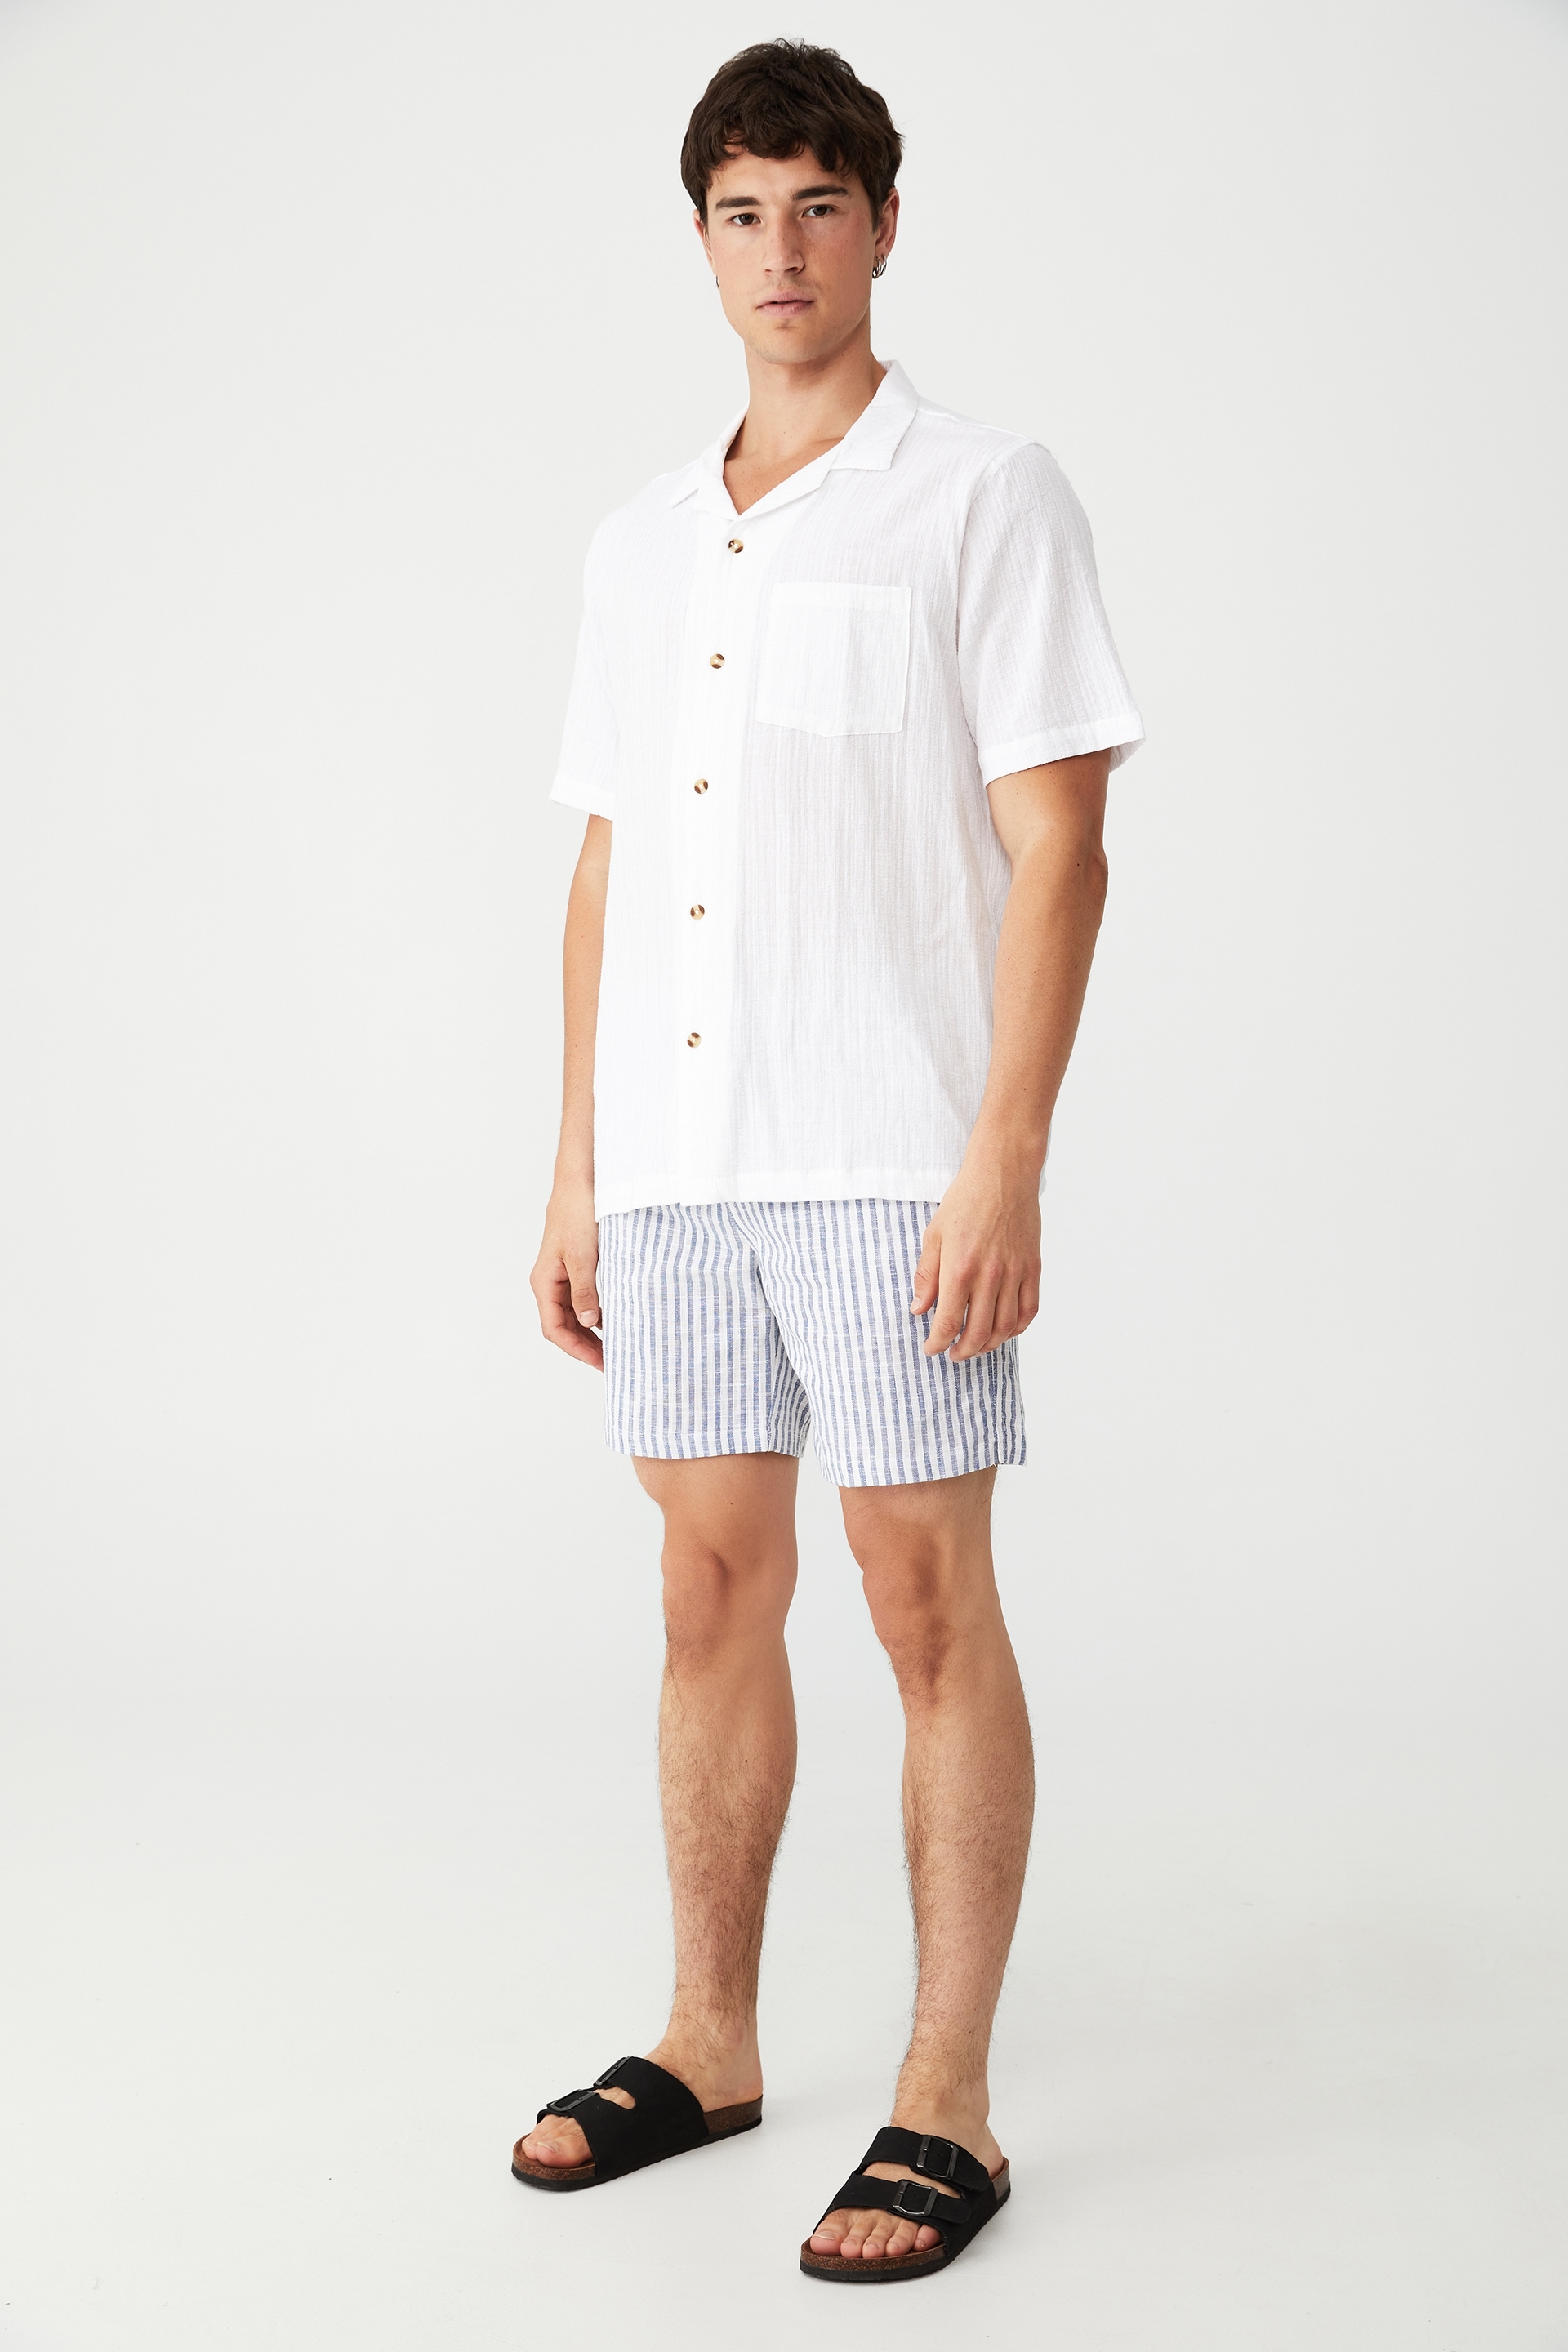 Cotton On Men - East Coast Textured Short - Indigo stripe